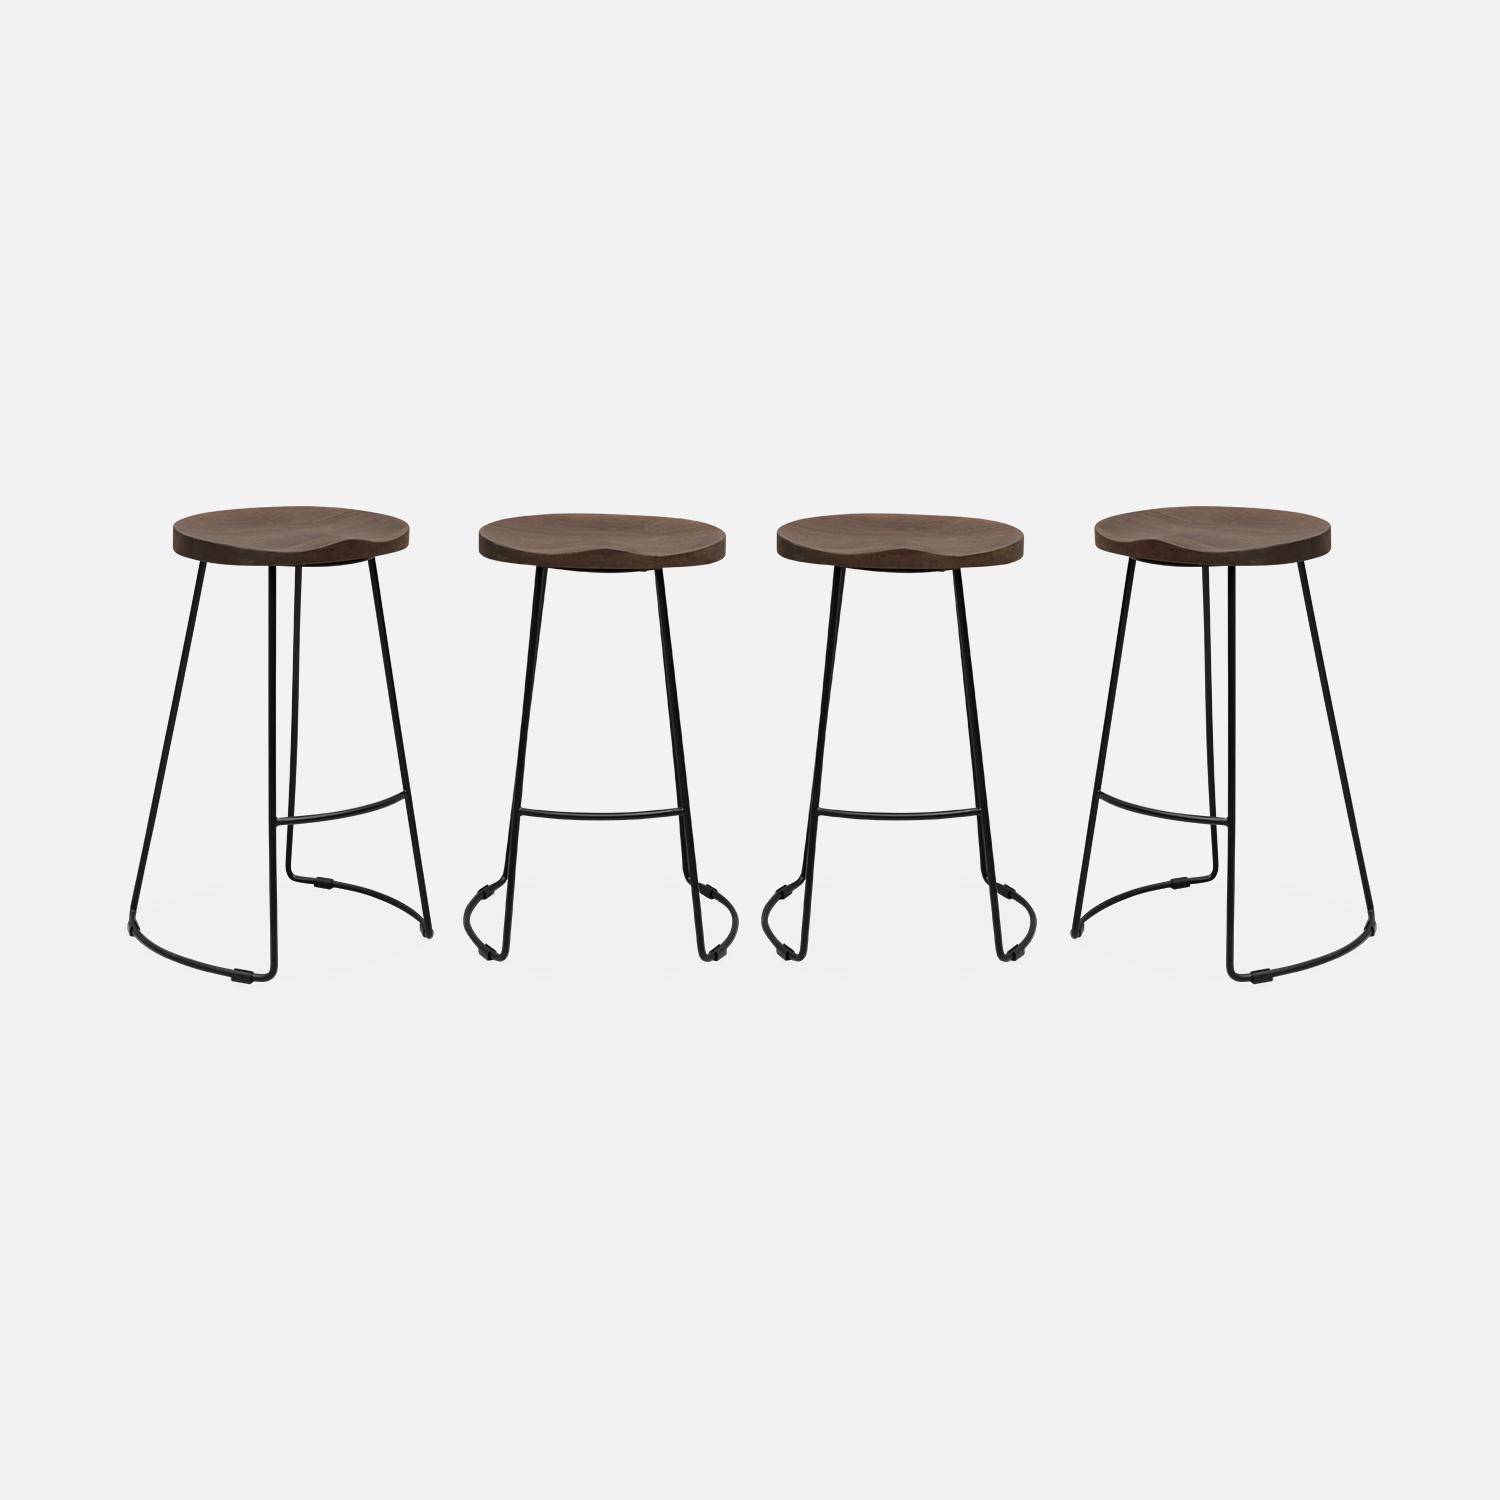 Set of 4 industrial metal and wooden bar stools, 44x36x65cm, Jaya, Light Walnut, Mango wood seat, black metal legs Photo4